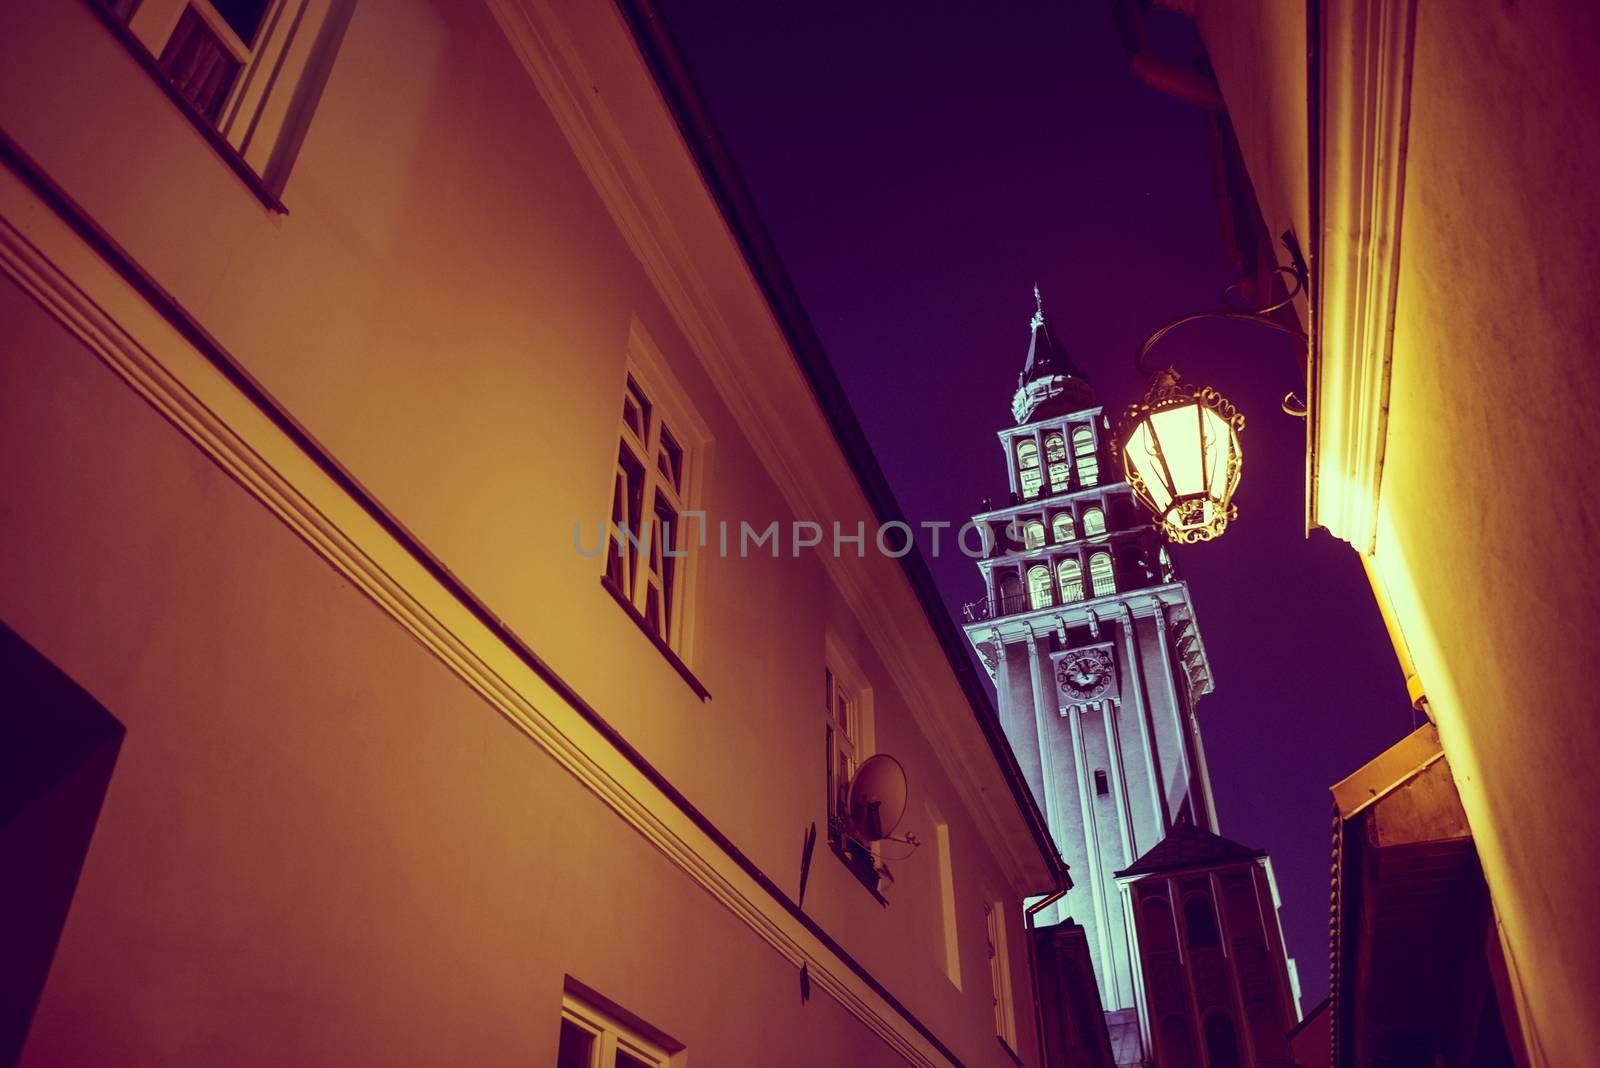 Bielsko Biala, Poland Old Town Church Tower and the Narrow Street. Poland, Europe.